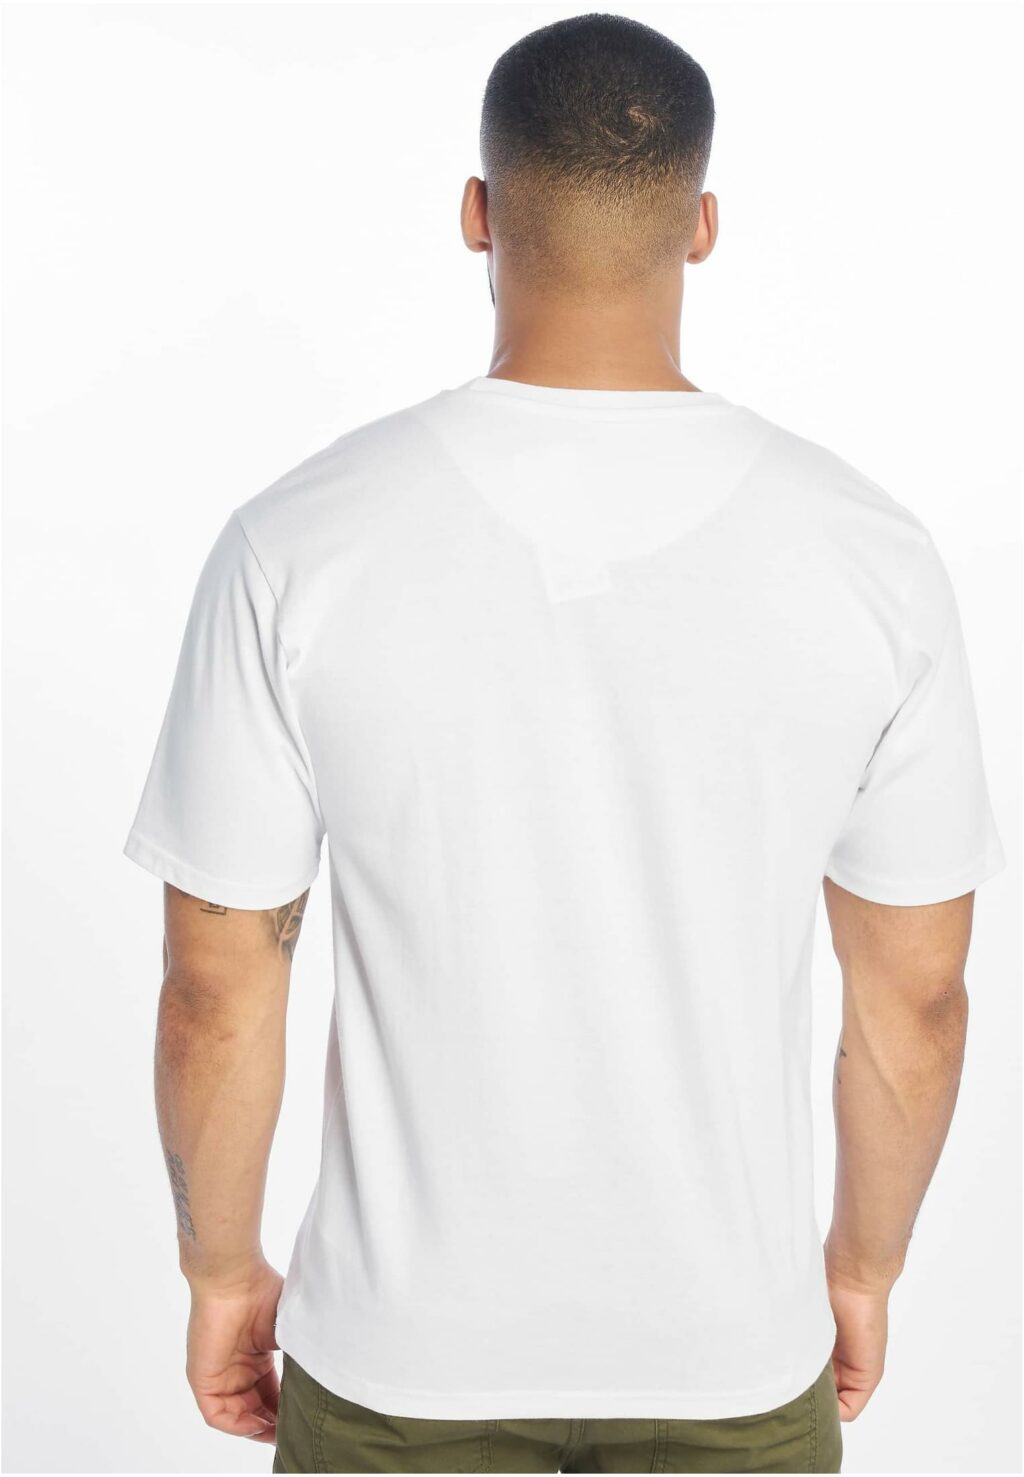 DEF Her Secret T-Shirt white DFTS055